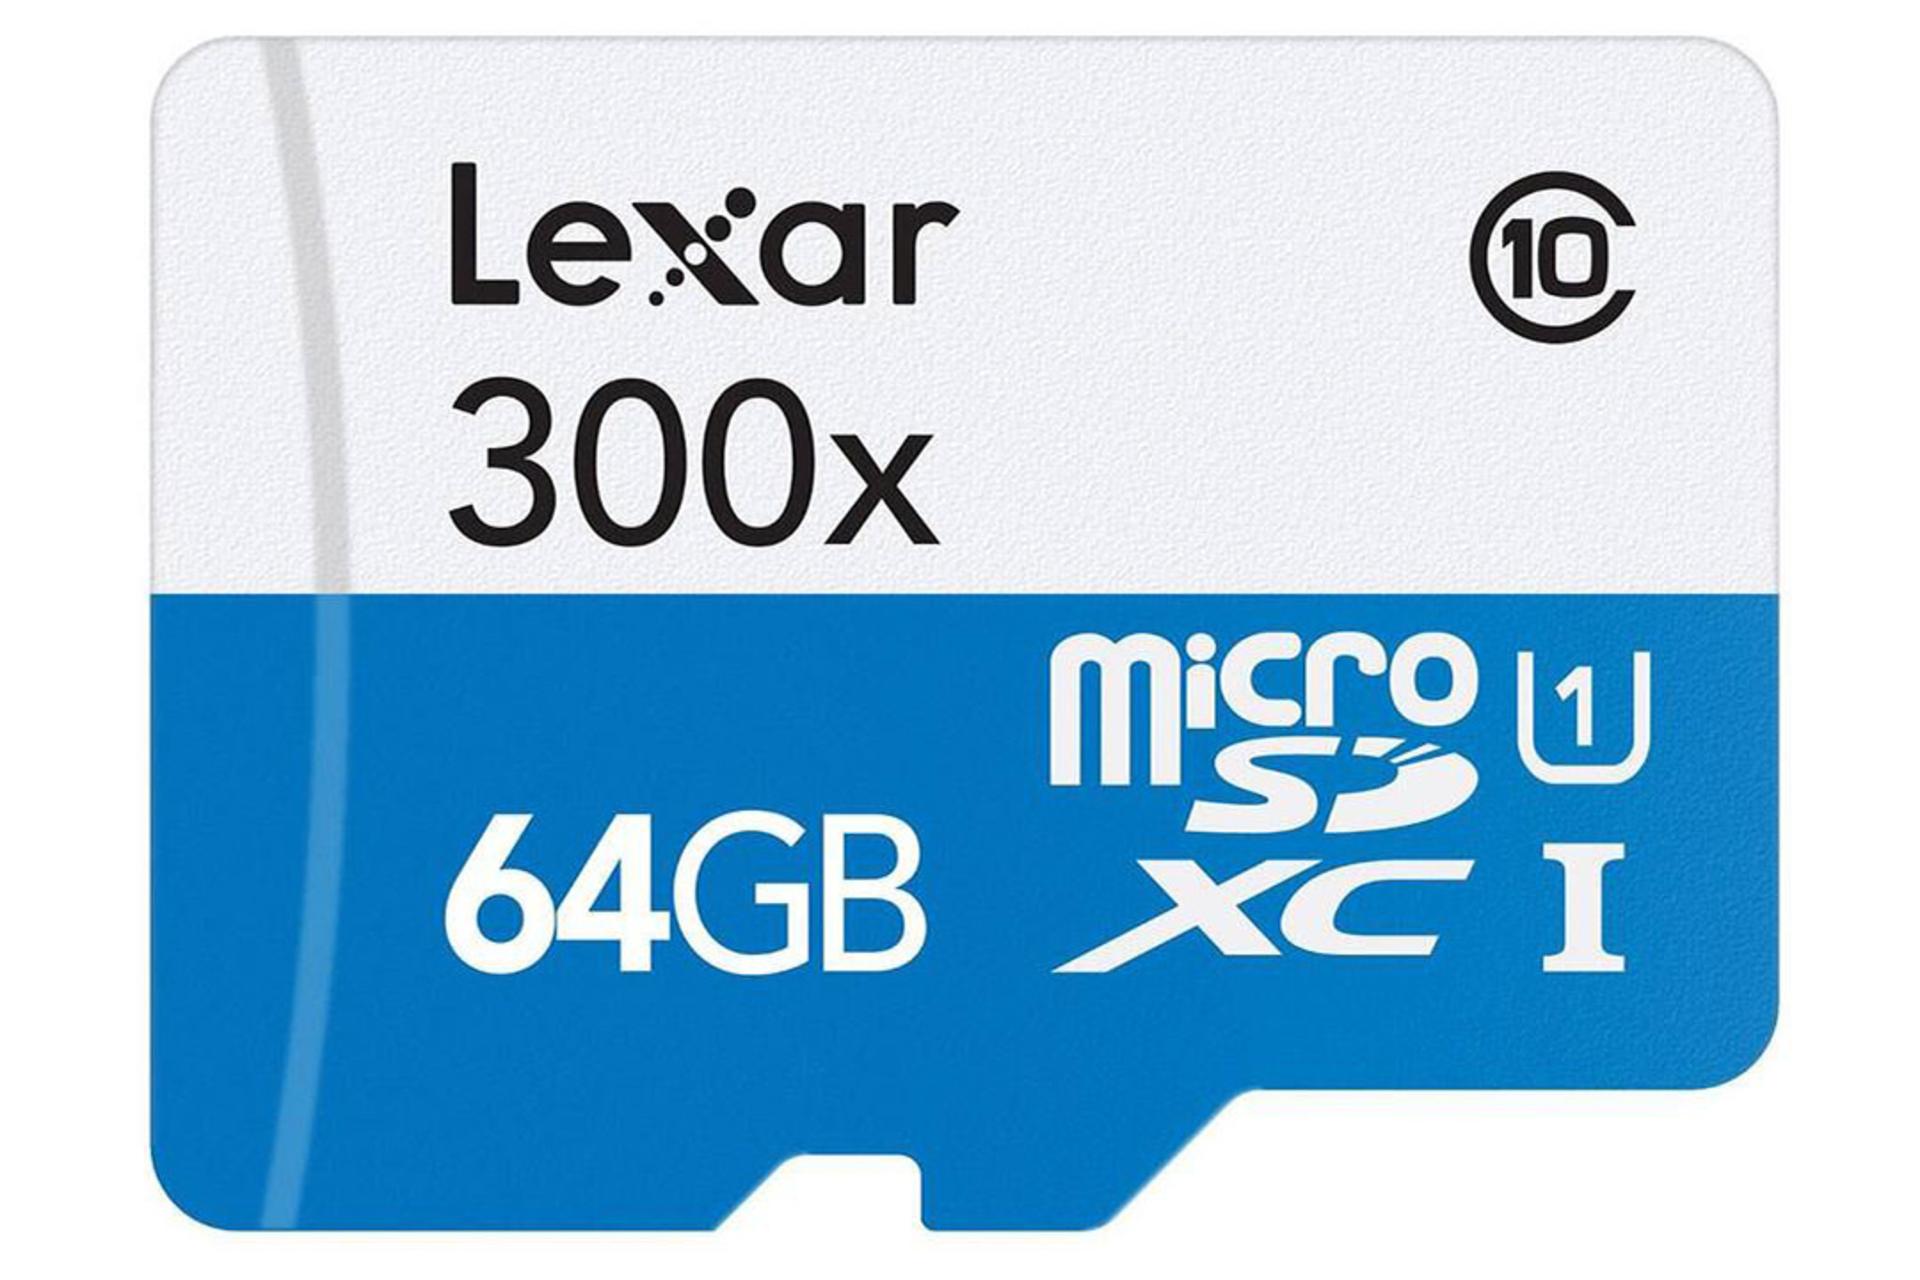 Lexar High Performance microSDXC Class 10 UHS-I U1 64GB